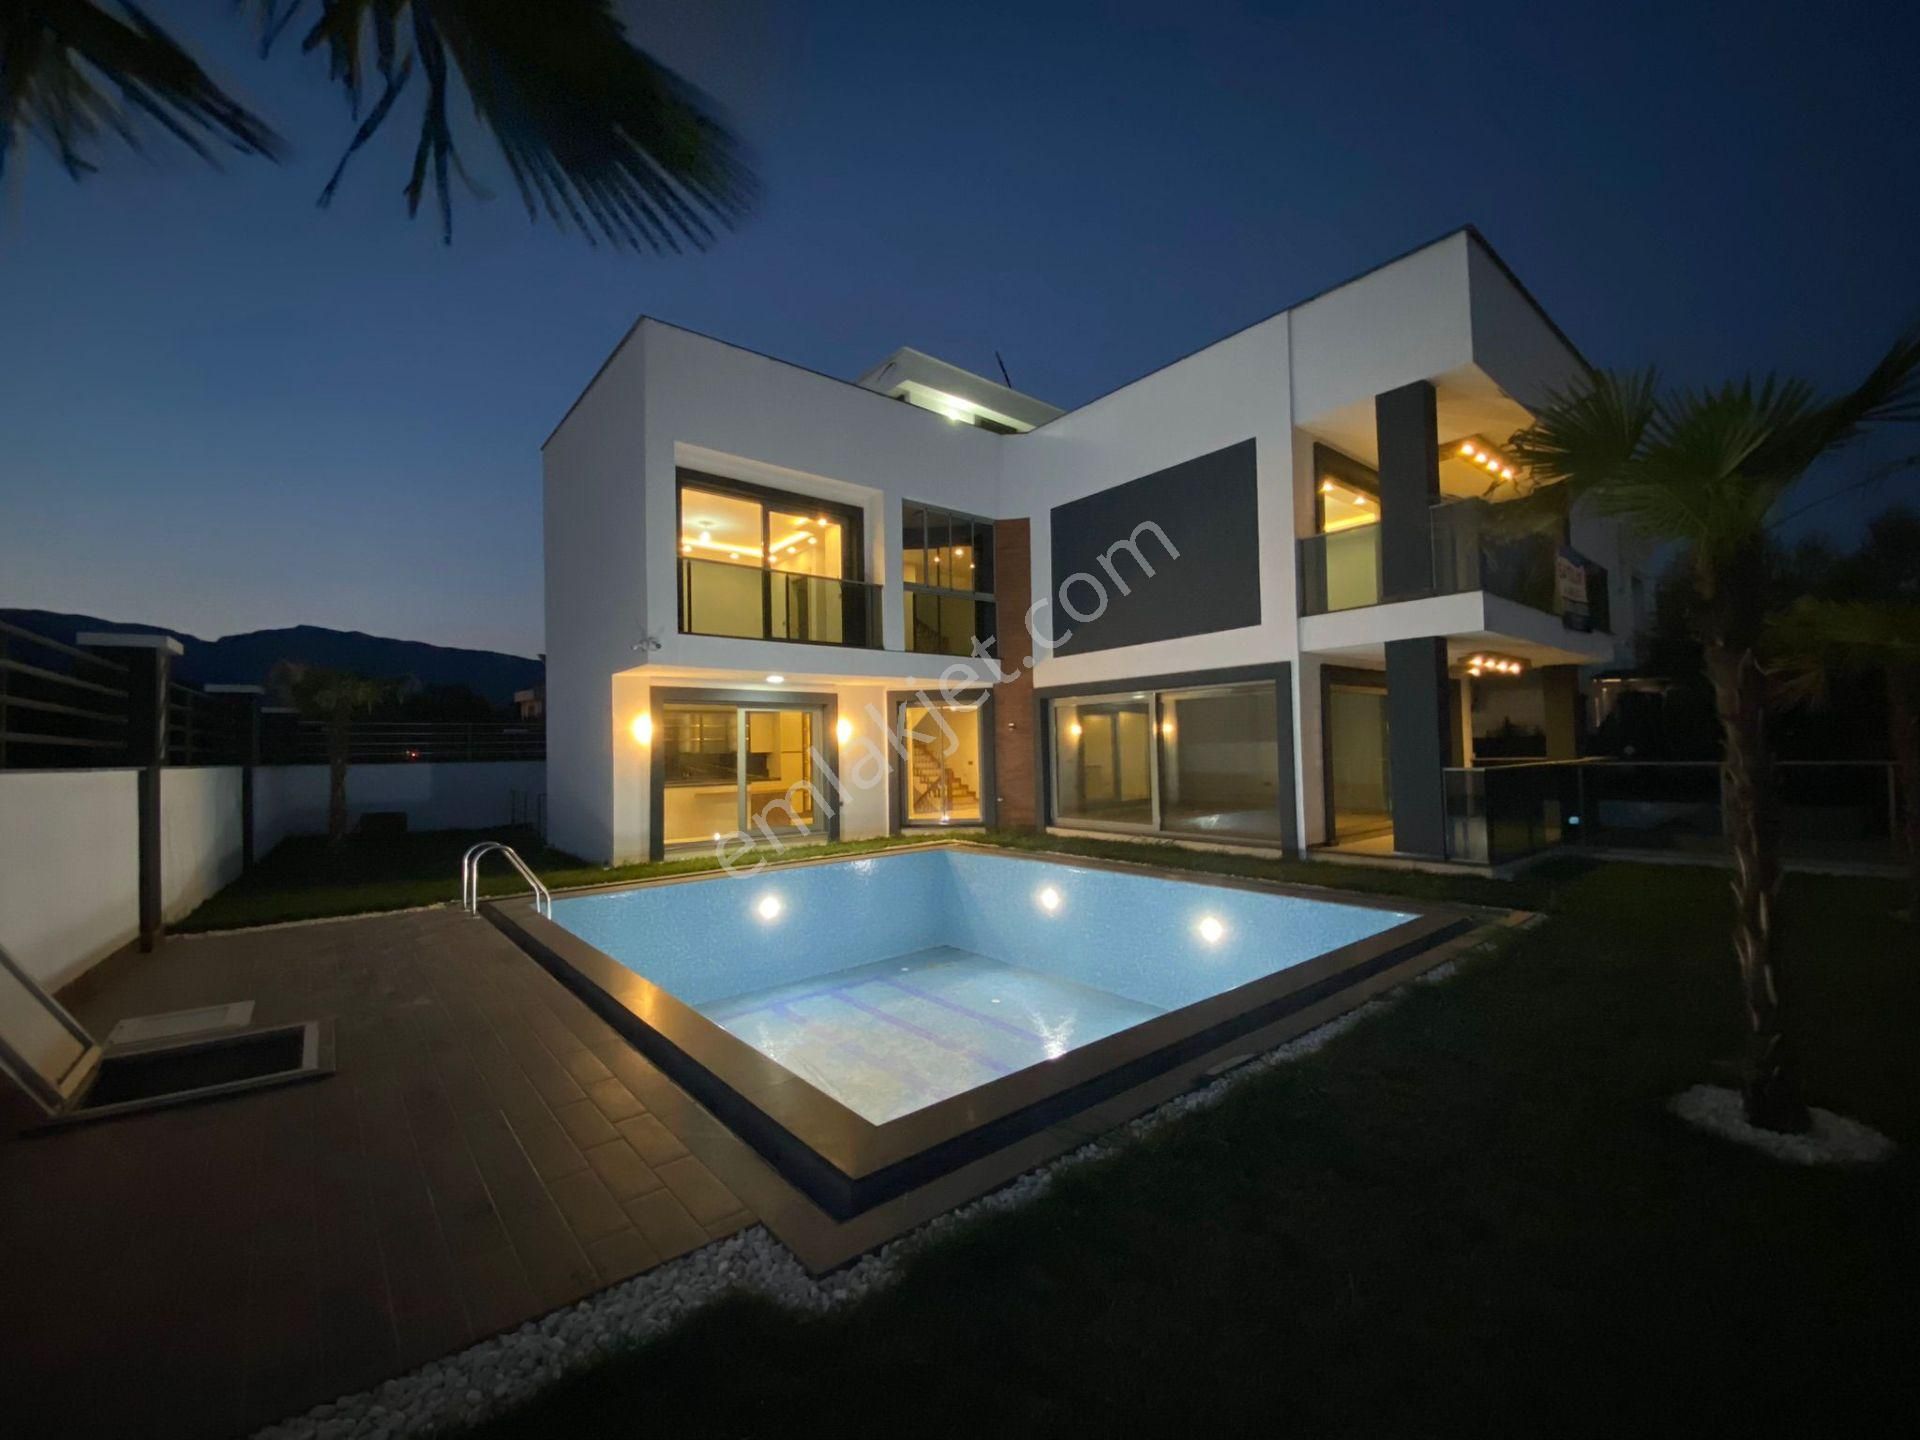 Edremit Akçay Satılık Villa  SABRİ PINARBAŞI'dan AKÇAY'da ULTRA LÜKS SATILIK MÜSTAKİL VİLLA 